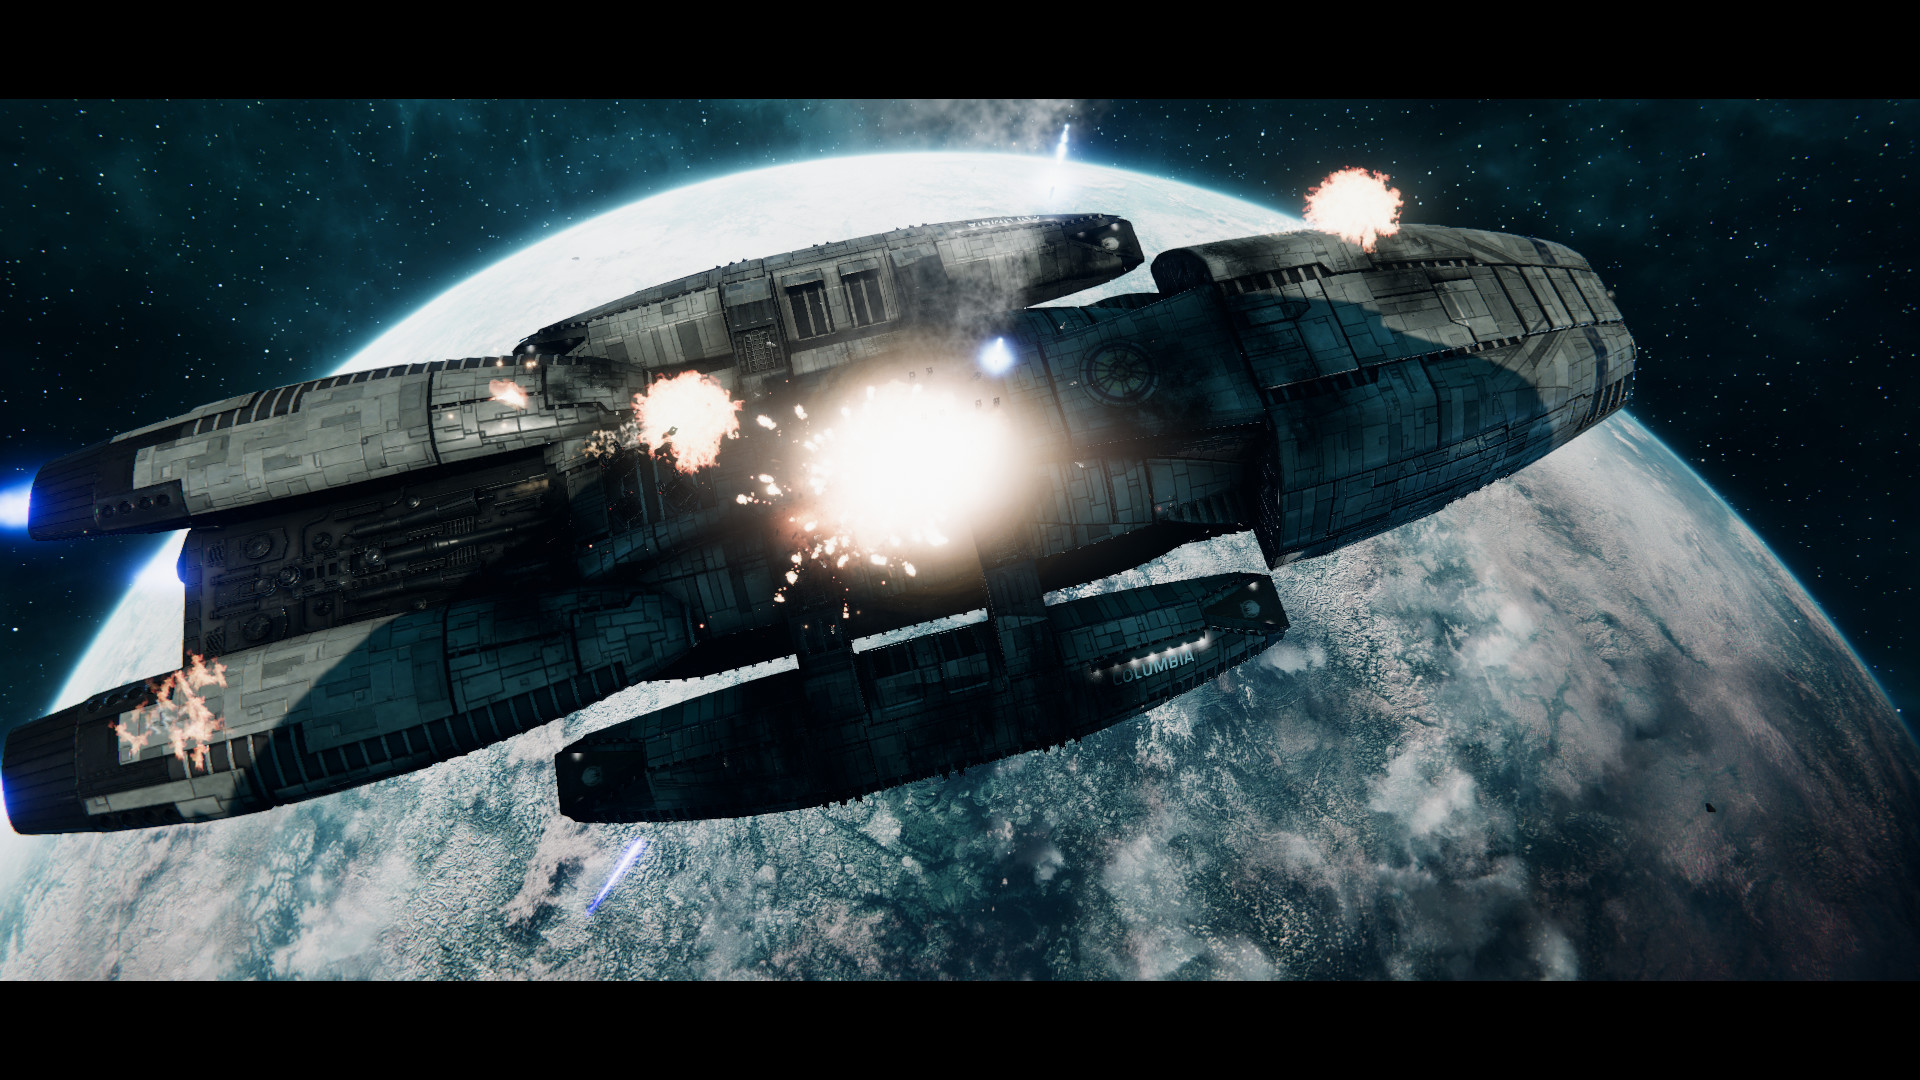 Battlestar Galactica Deadlock - Armistice DLC Steam CD Key